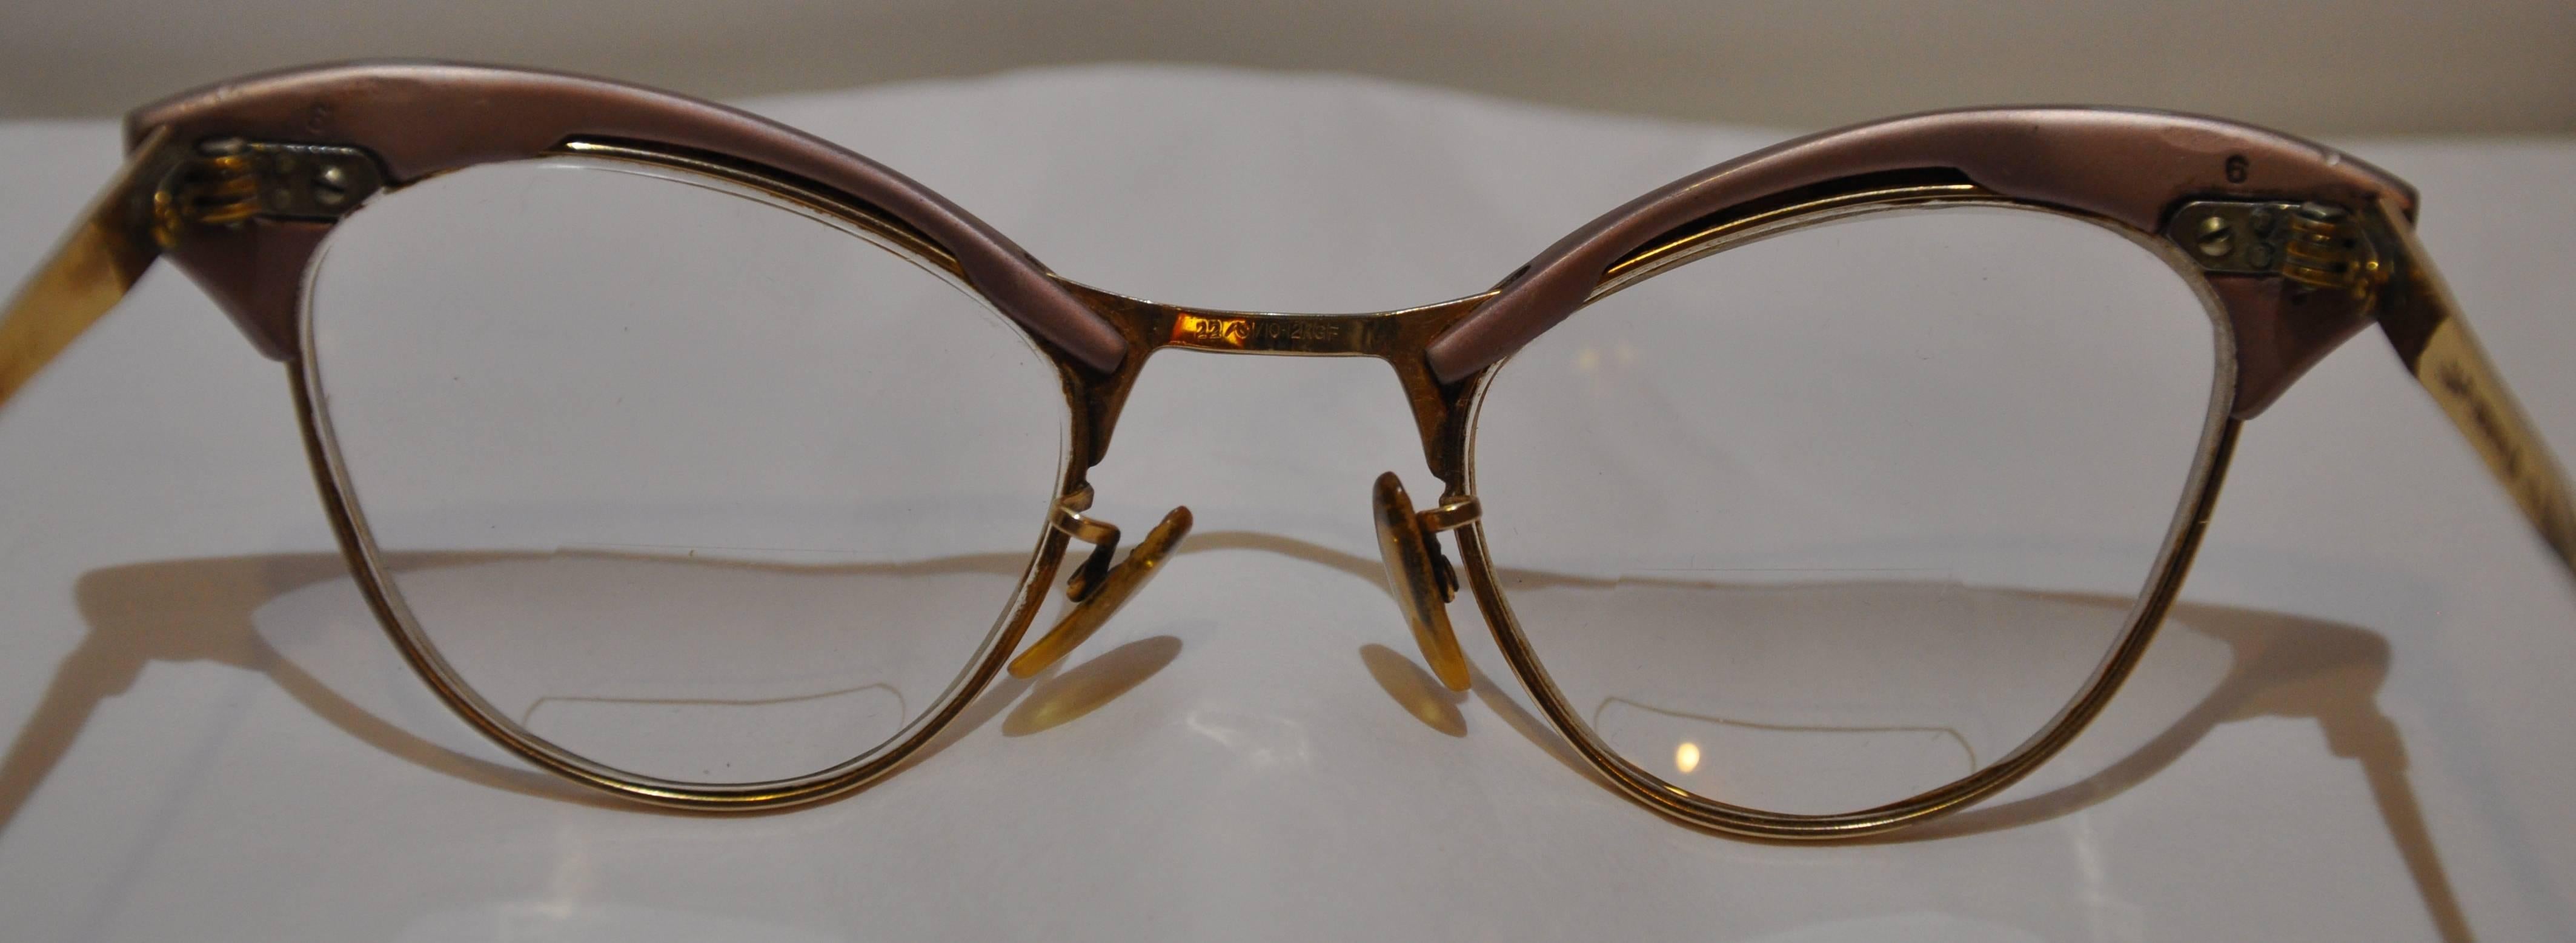 lavender glasses frames